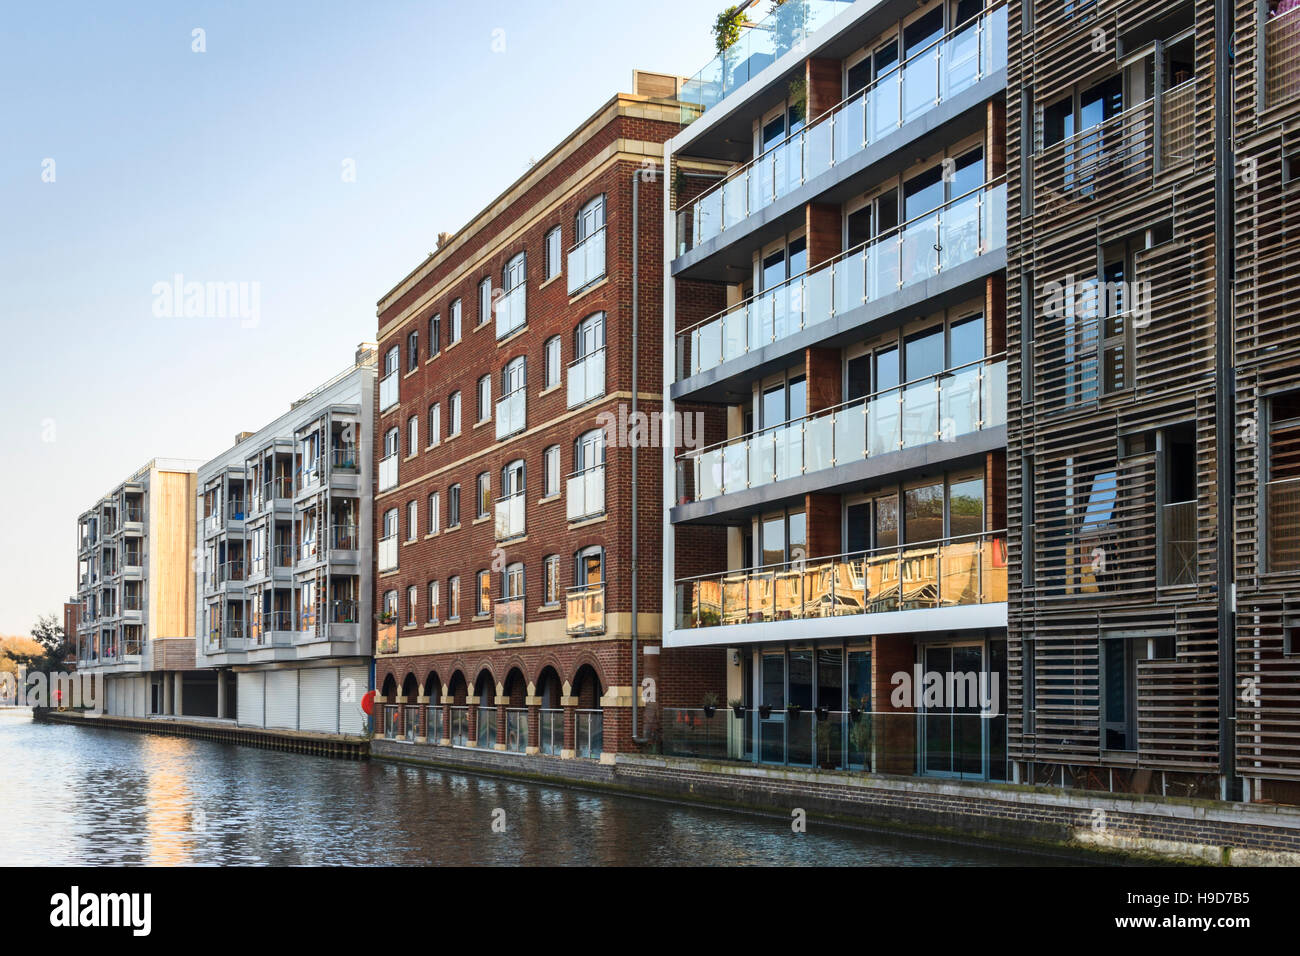 Star Wharf apartments, Regent's Canal, St. Pancras, London, UK Stock Photo